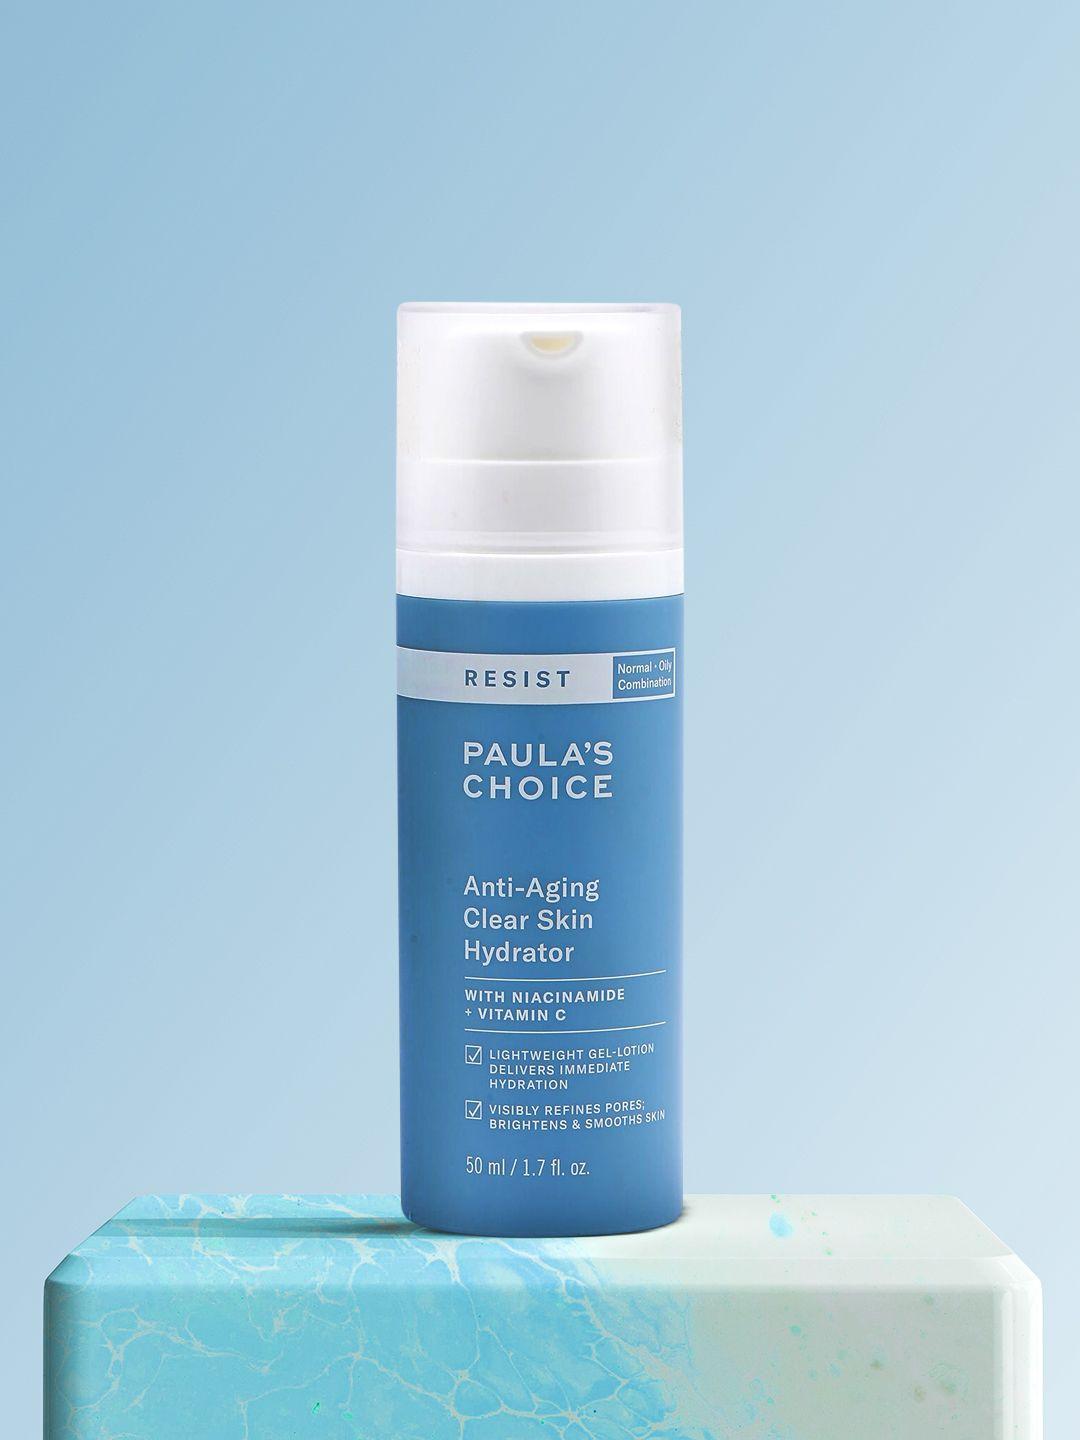 paula's choice blue anti-aging clear skin hydrator moisturizer face cream 50 ml